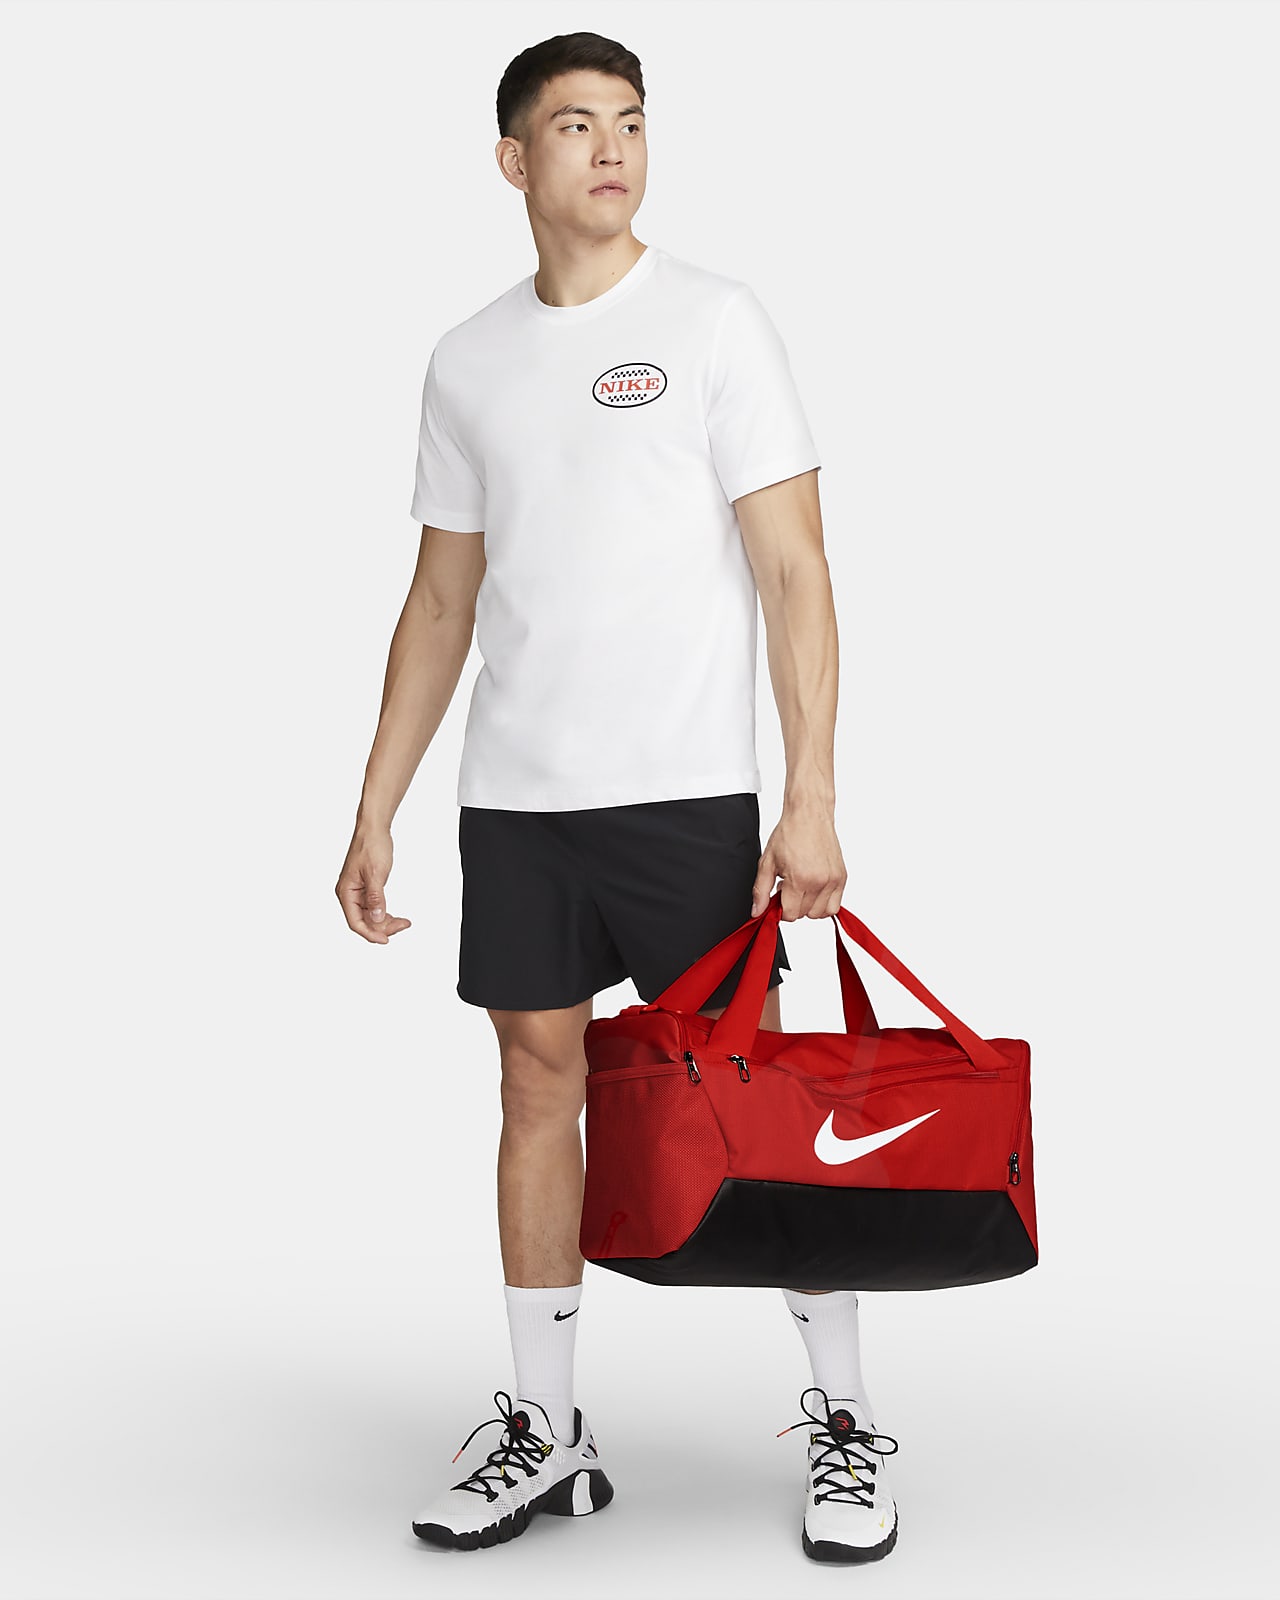 Nike Brasilia Medium Tennis Duffle - University Red